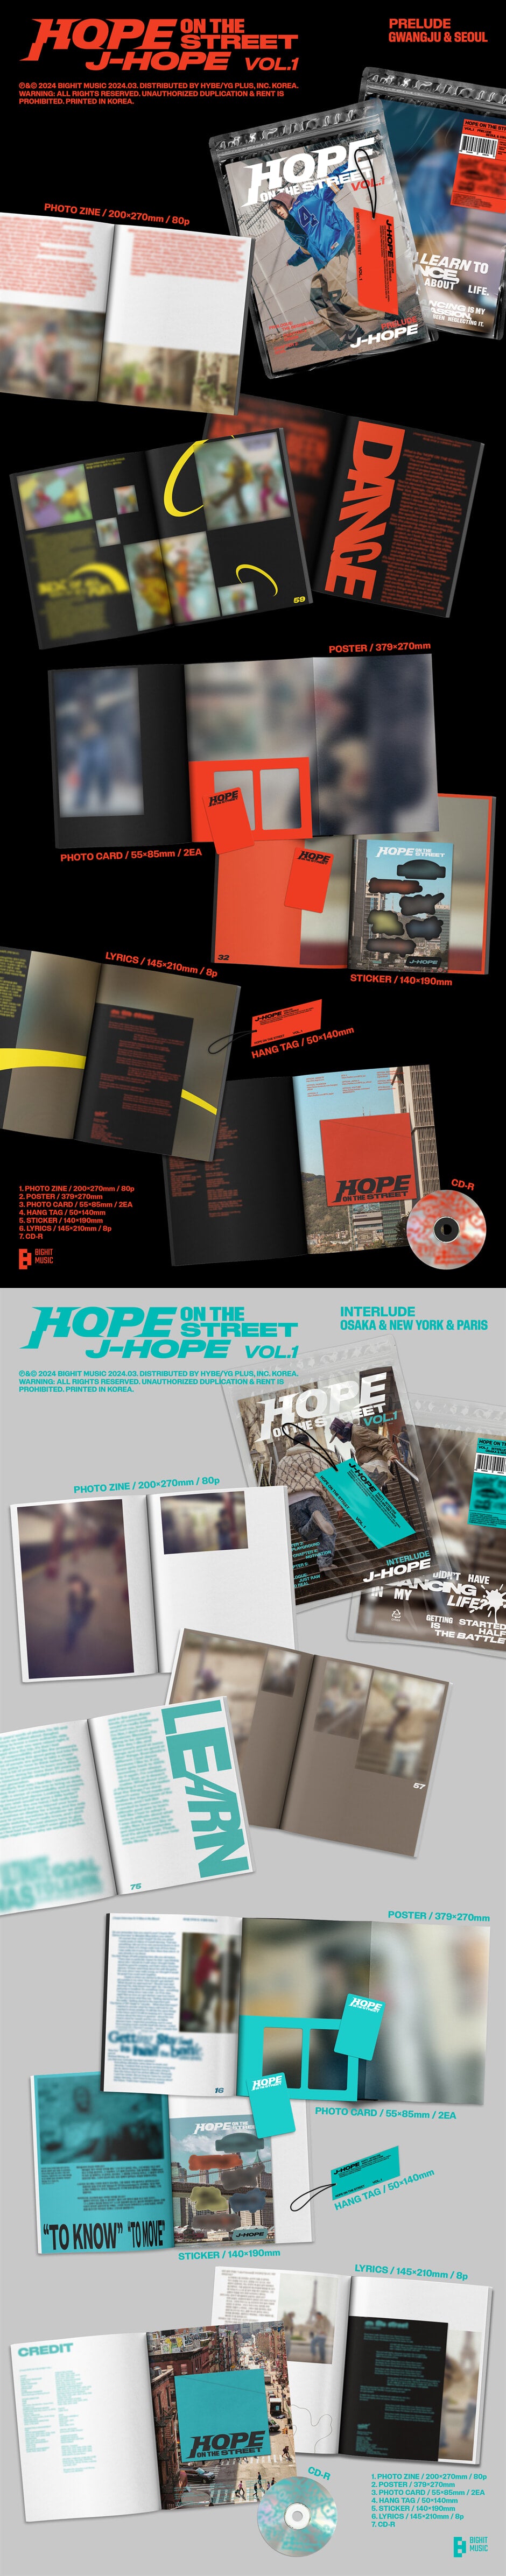 j-hope – HOPE ON THE STREET VOL.1 (Random) + Weverse Gift